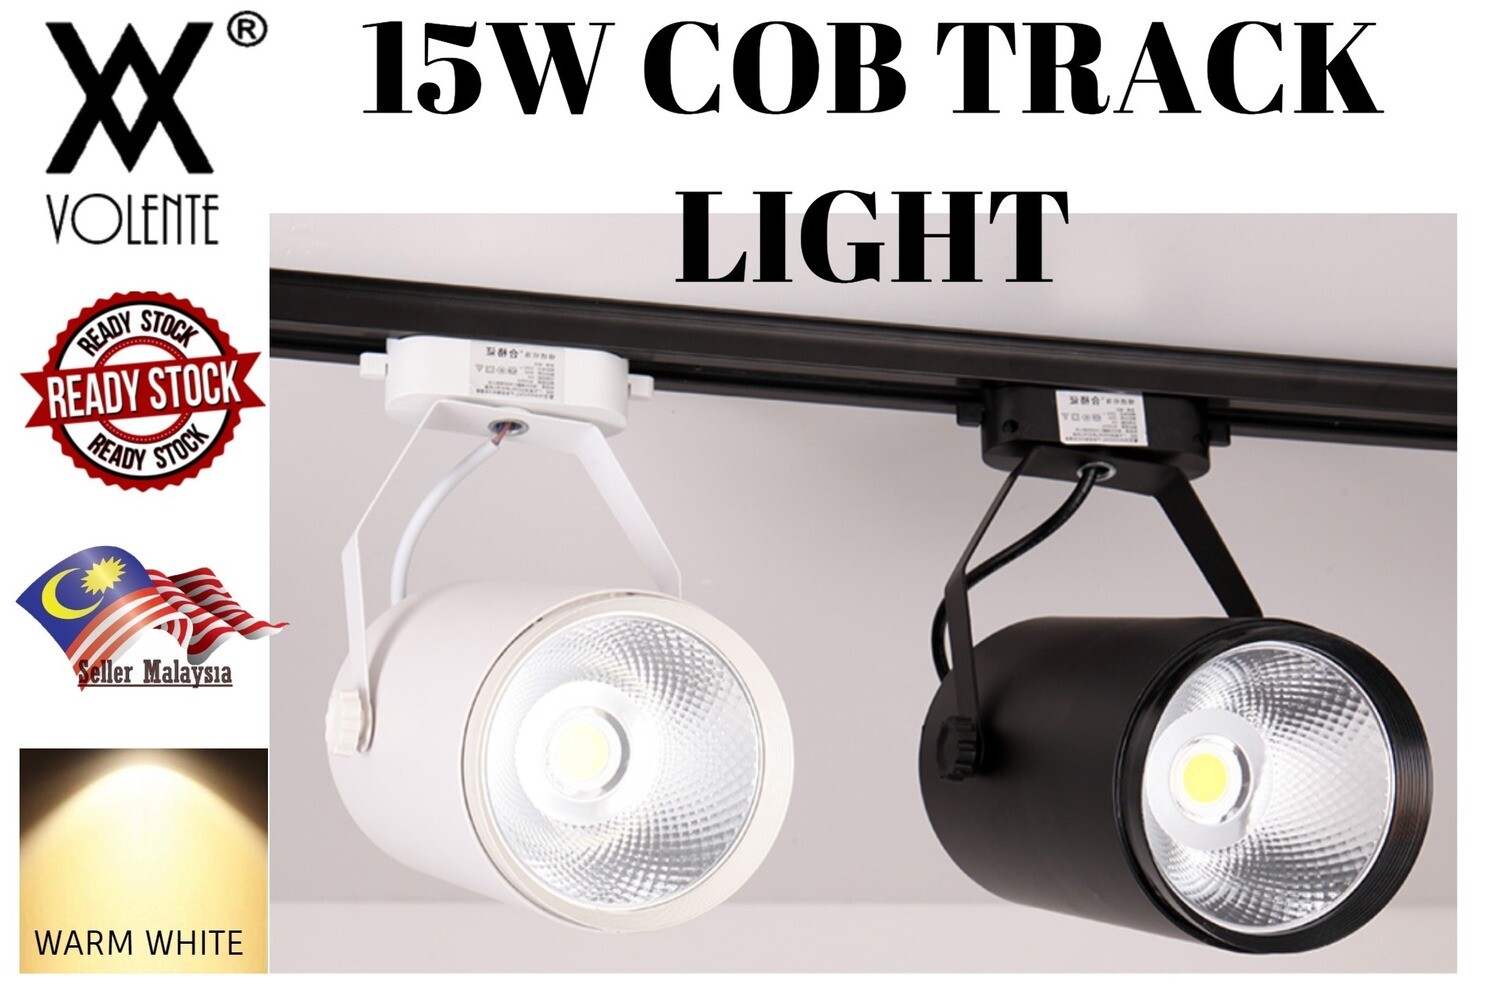 LED SPOTLIGHT COB TRACK LIGHT CLOTHING SHOP BACKGROUND WALL SHOWROOM SPOTLIGHT RAIL LIGHT 15W